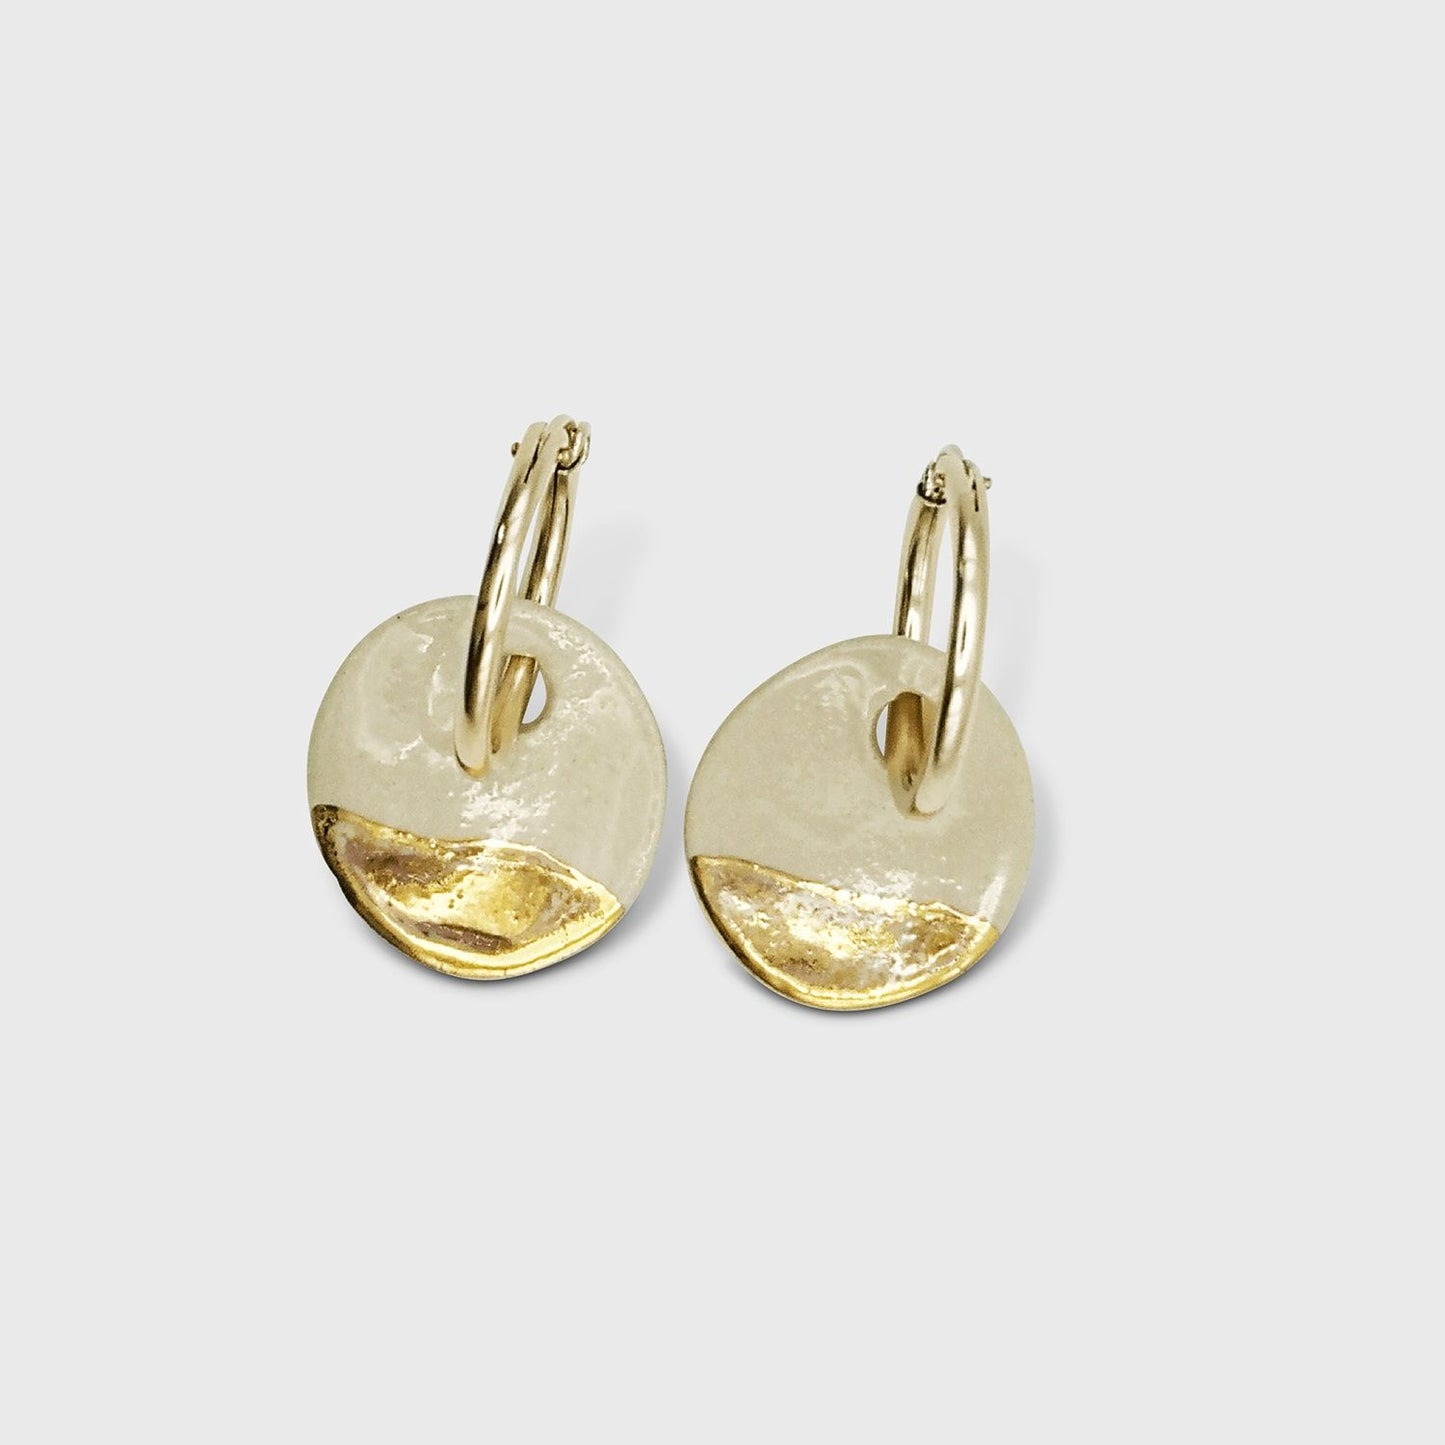 Boucles d'oreilles blanc or gold filled luxe artisanat francais